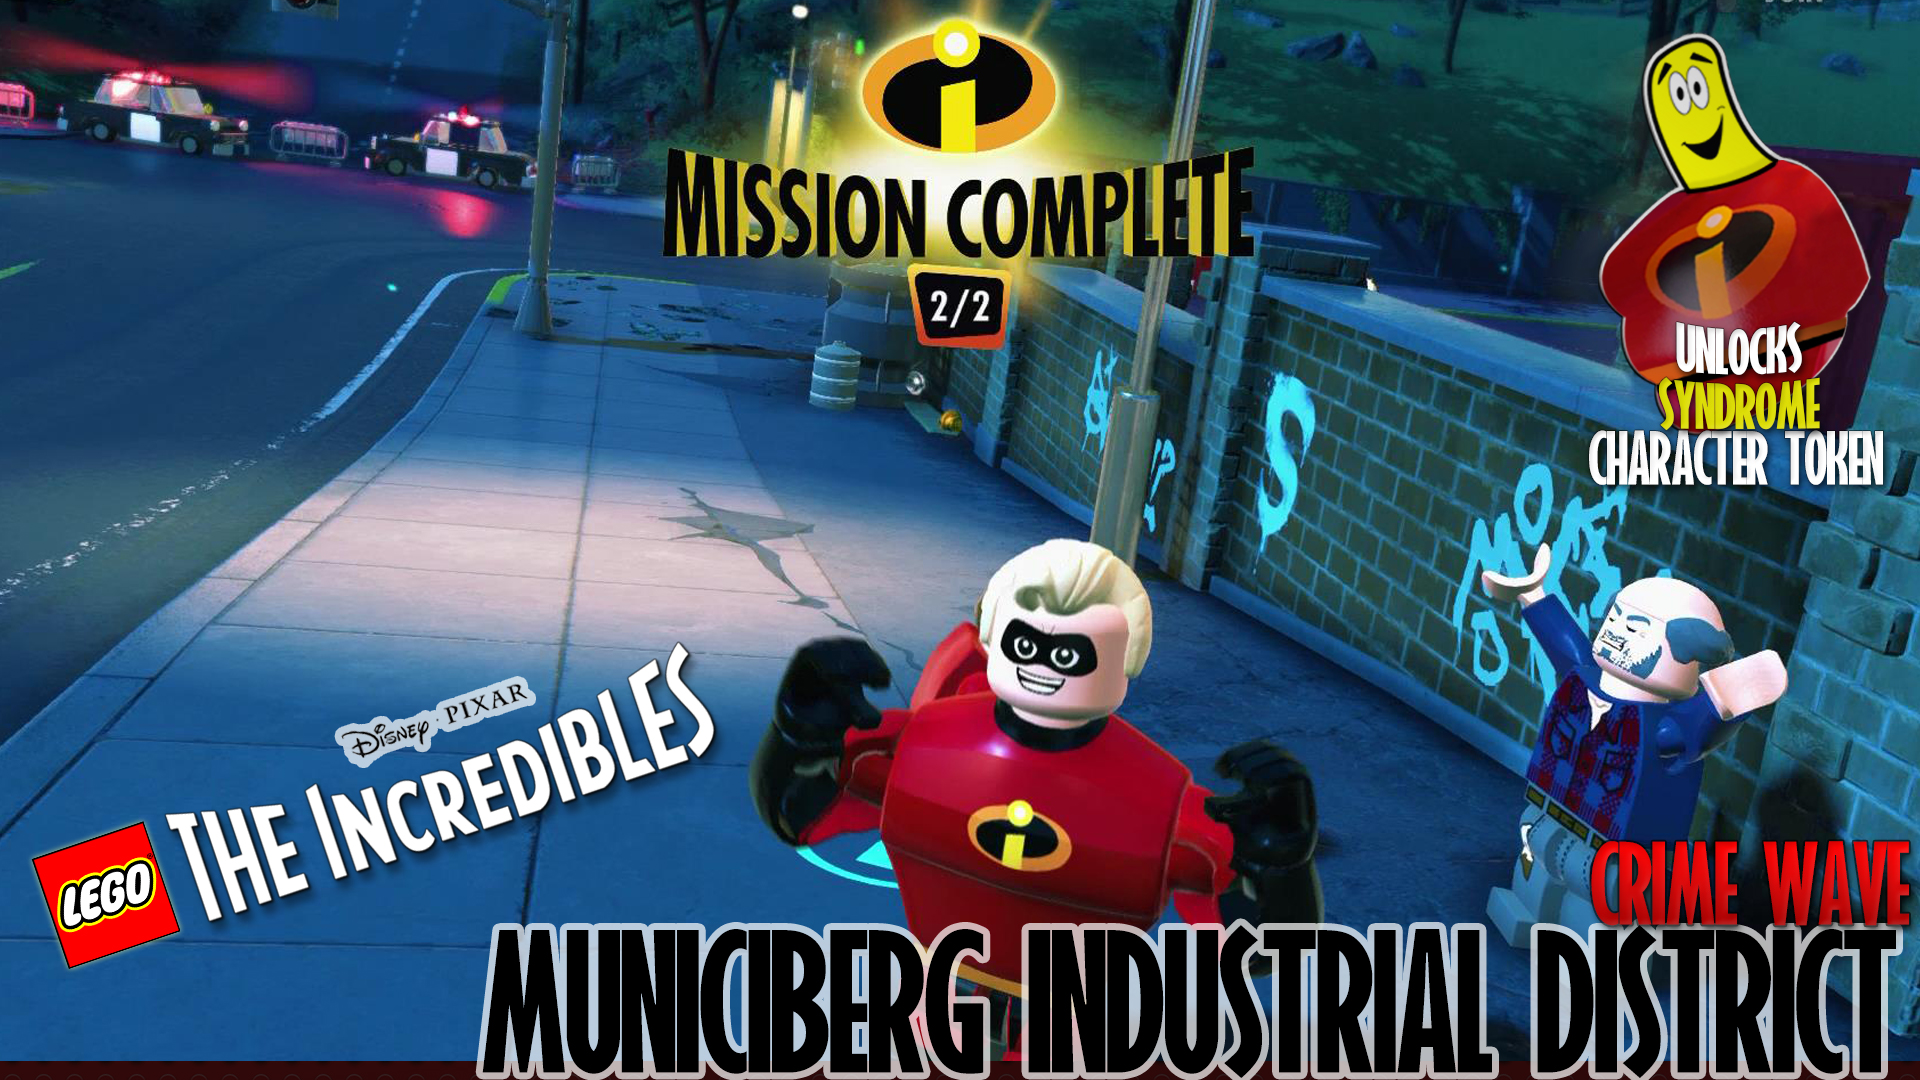 Lego The Incredibles: Municiberg / Industrial District CRIME WAVE – HTG